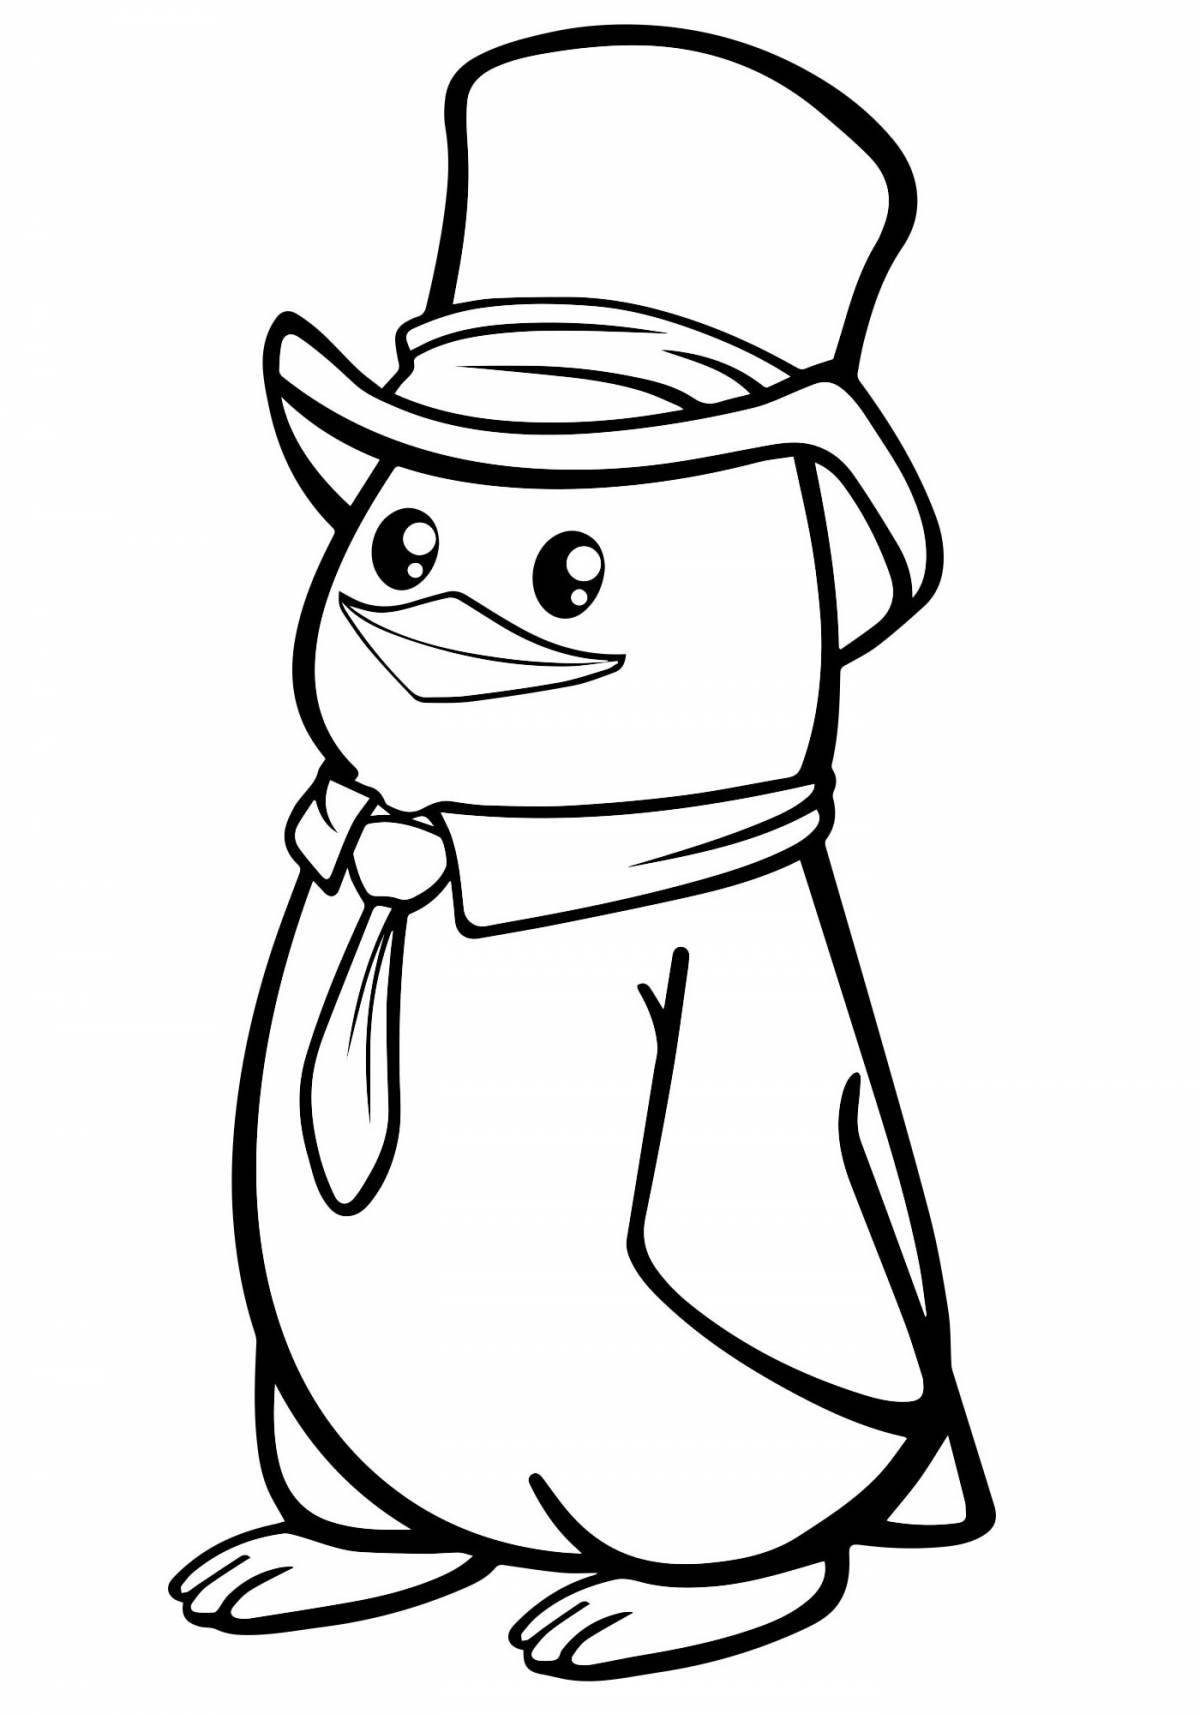 Penguin inspiration drawing